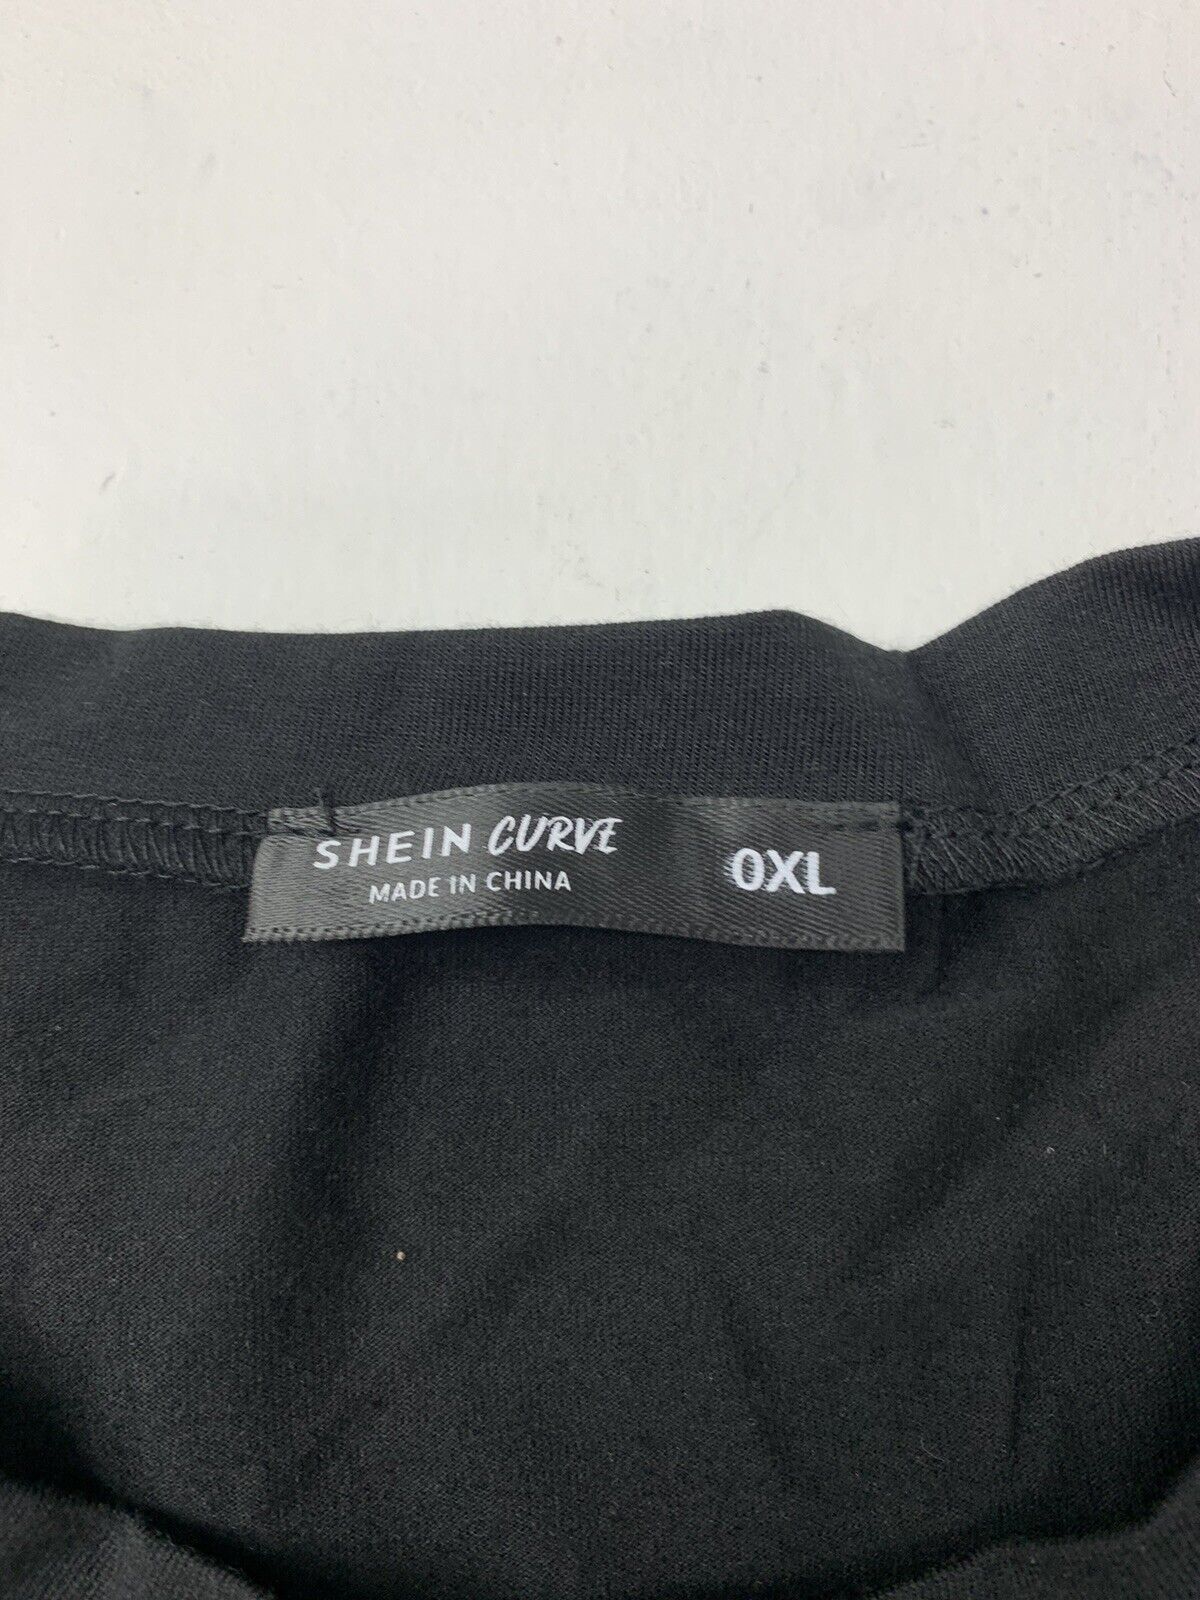 Shein Curve Womens Black Colorblock Long Sleeve Shirt Size 0XL